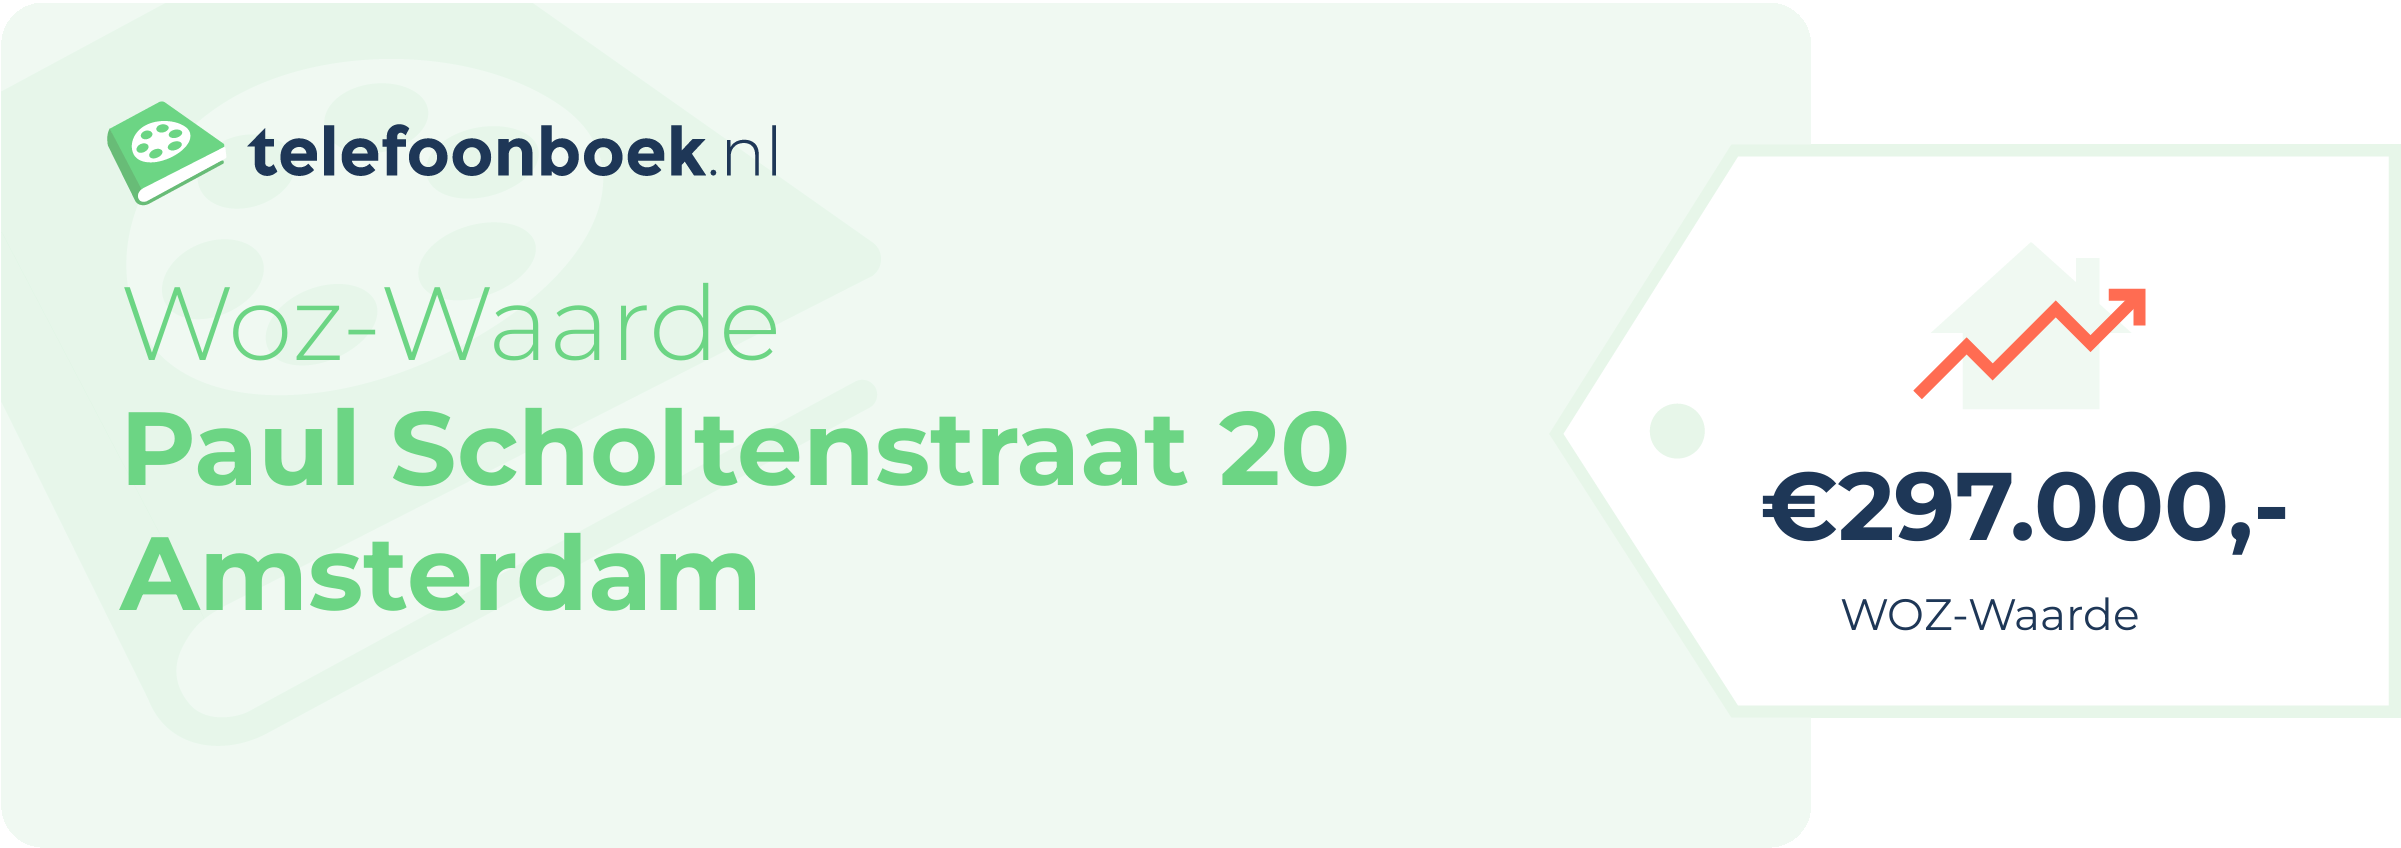 WOZ-waarde Paul Scholtenstraat 20 Amsterdam